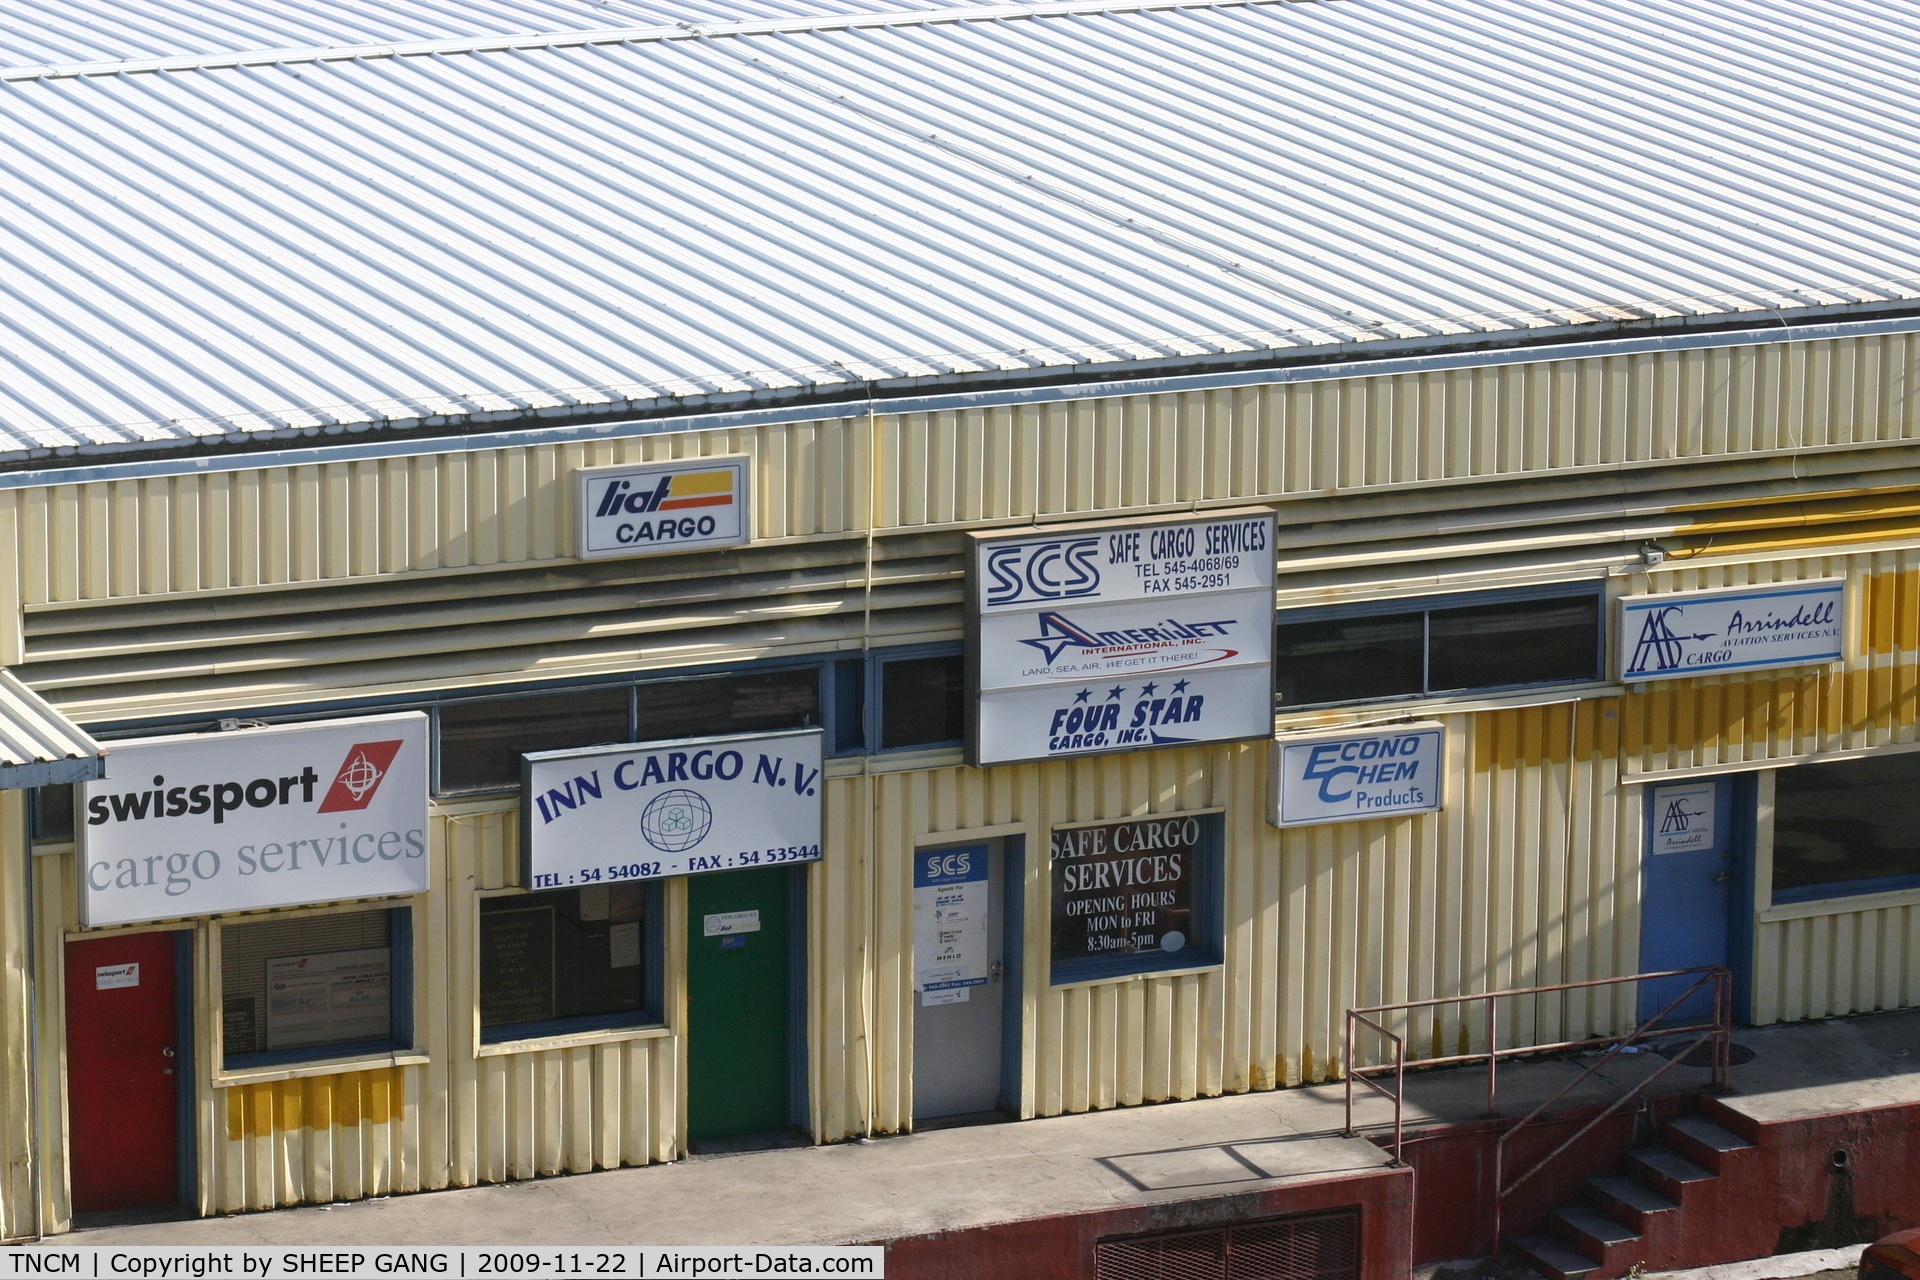 Princess Juliana International Airport, Philipsburg, Sint Maarten Netherlands Antilles (TNCM) - The front of the cargo building